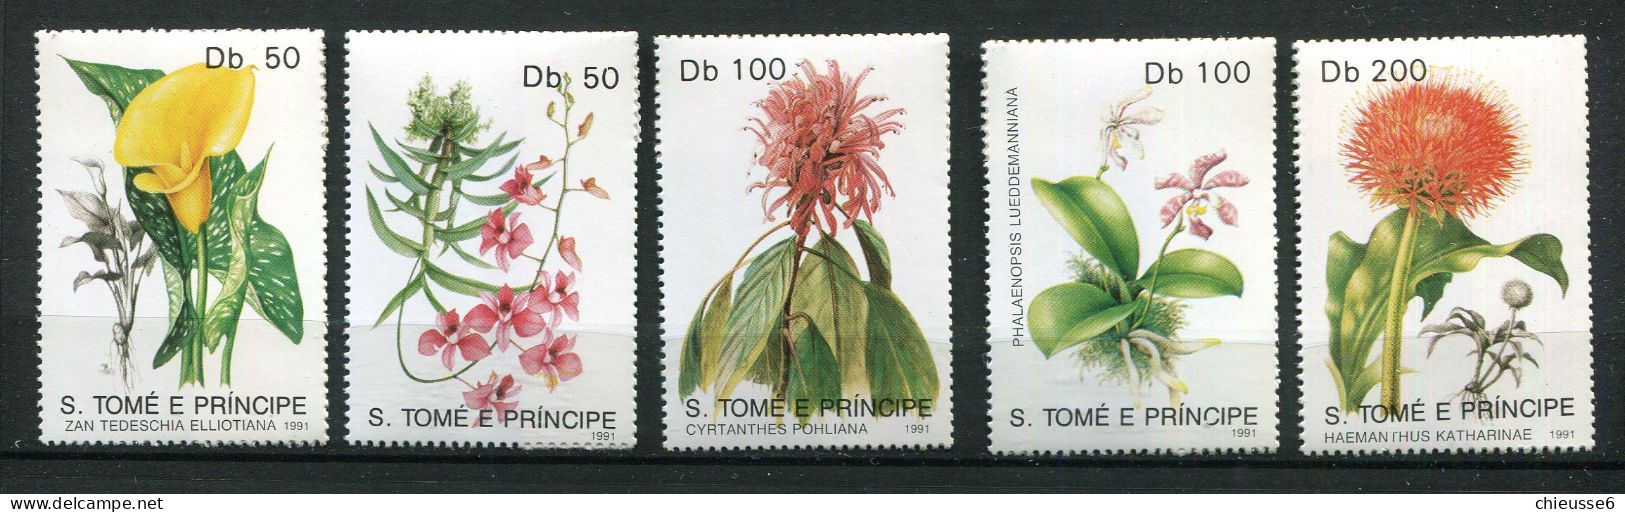 S. Tome  ** N° 1052 à 1056 - Fleurs - Sao Tome Et Principe